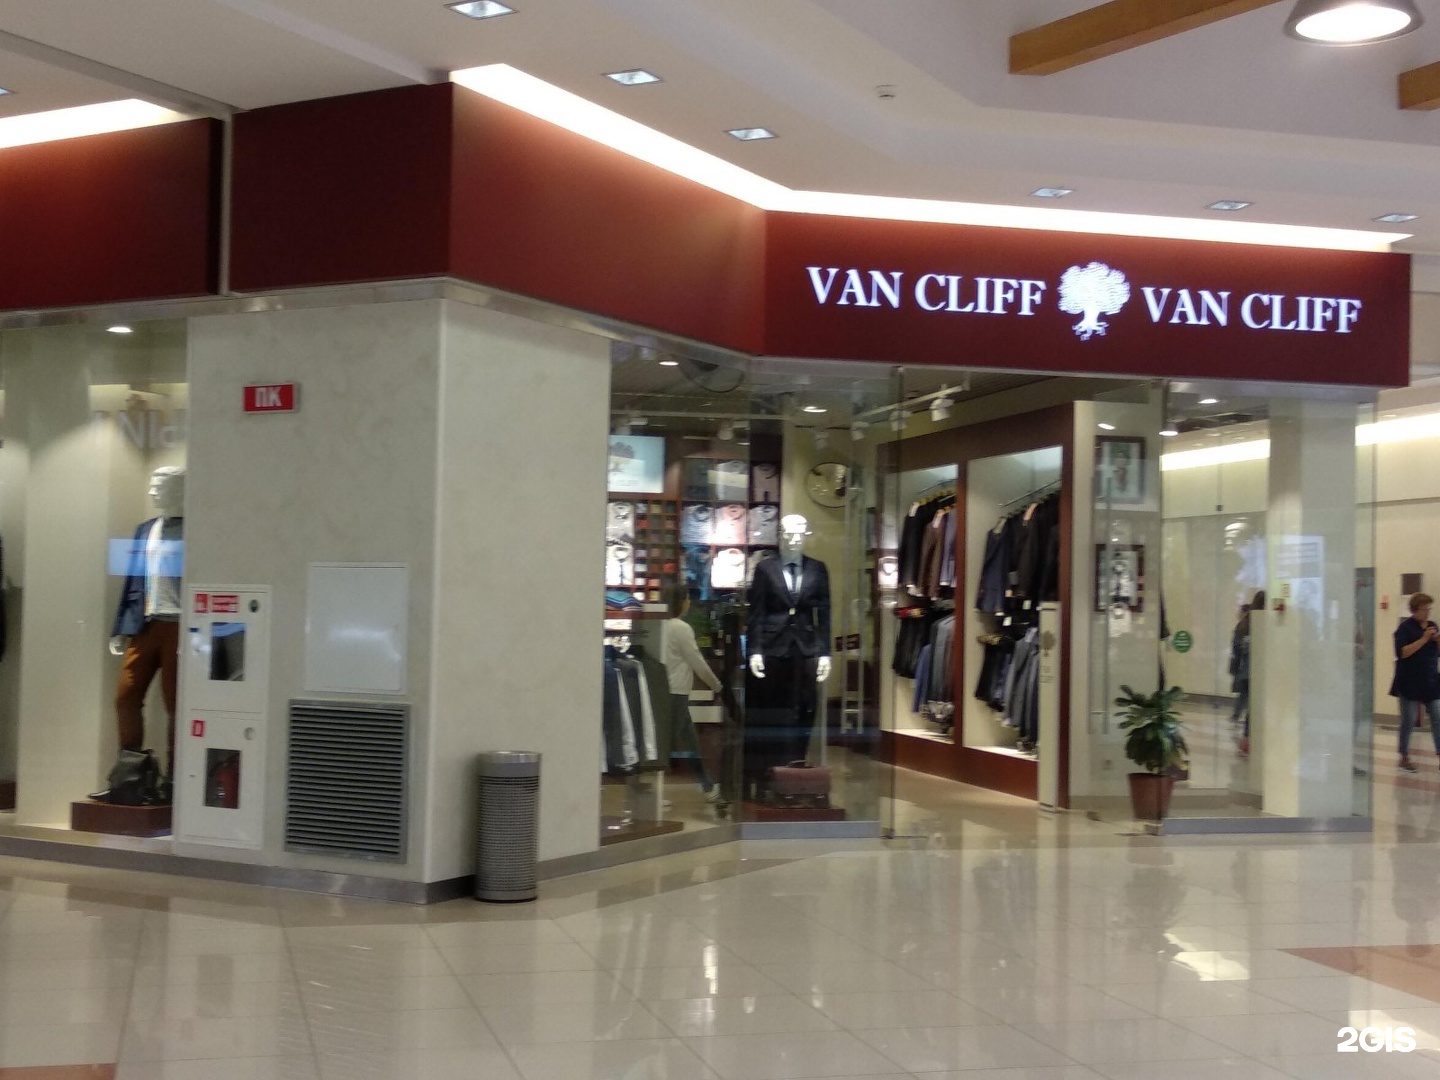 Van Cliff Пенза. Van Cliff магазин мужской одежды Москва. Пальто фирмы van Cliff. Van Cliff фото магазина.